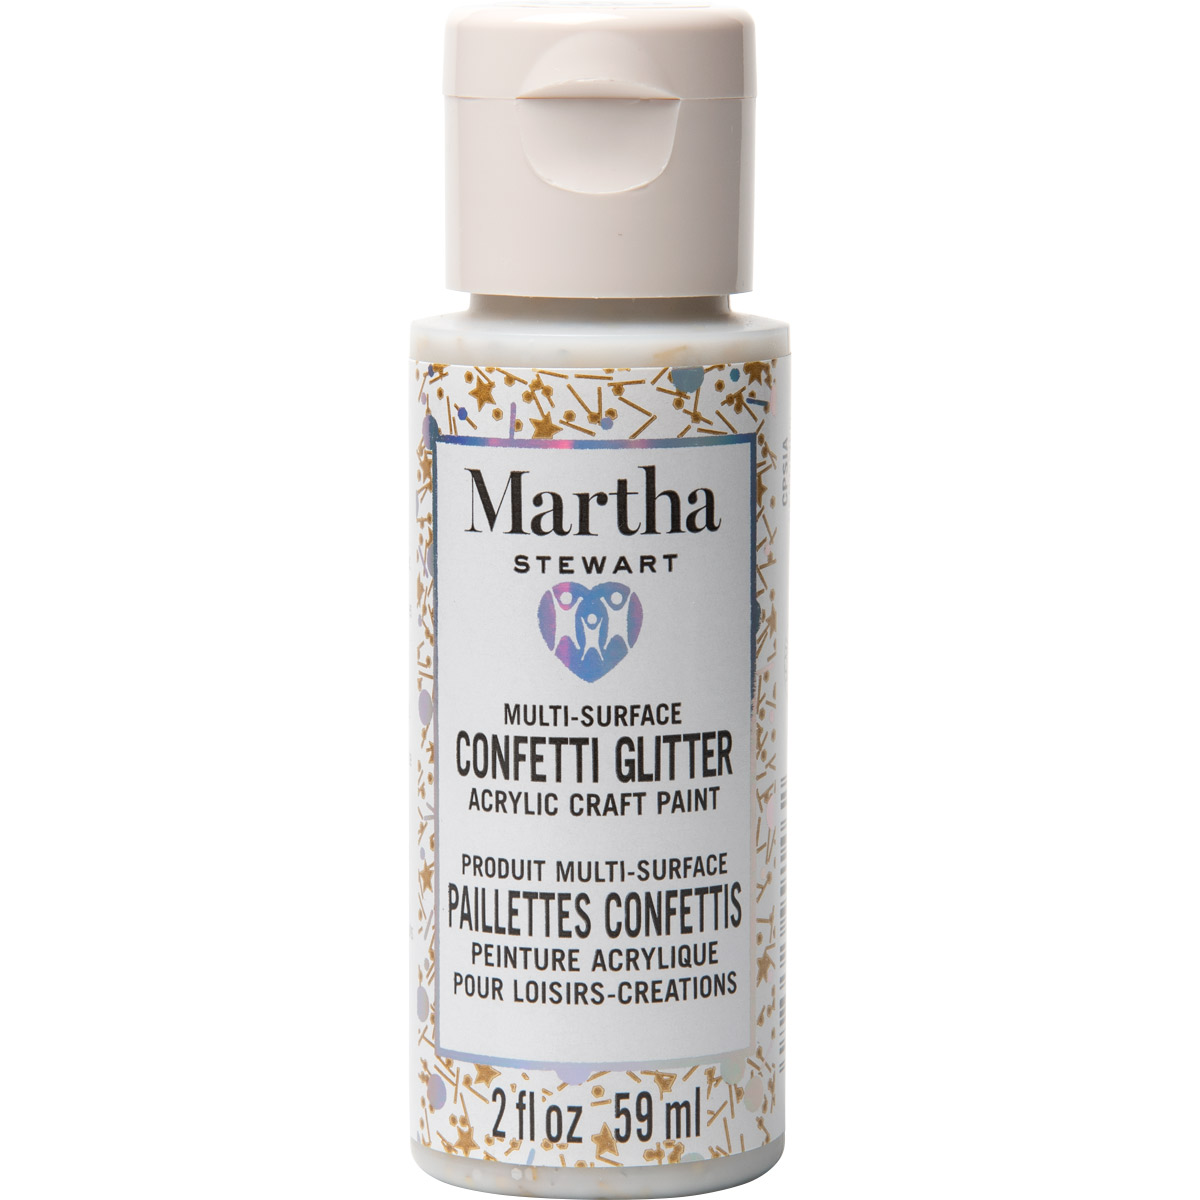 Martha Stewart ® Multi-Surface Confetti Glitter Acrylic Craft Paint CPSIA - Toast of the Town, 2 oz.